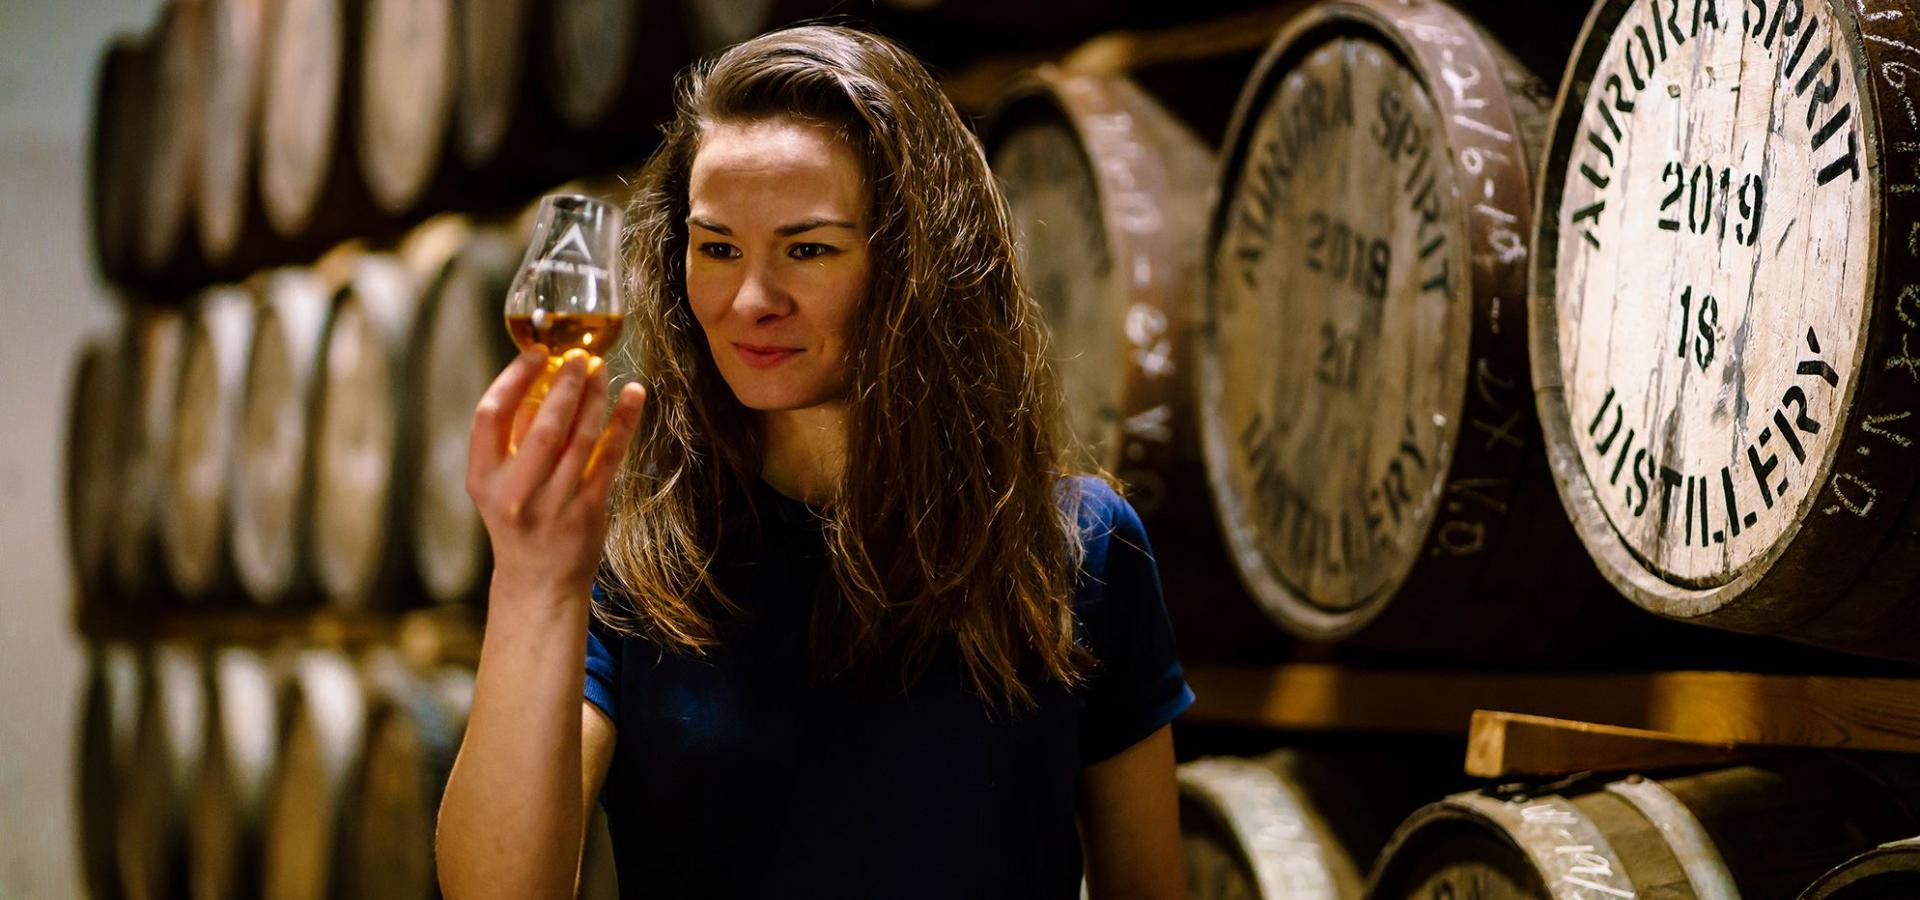 Besøk Aurora Spirit, verdens nordligste whisky destilleri